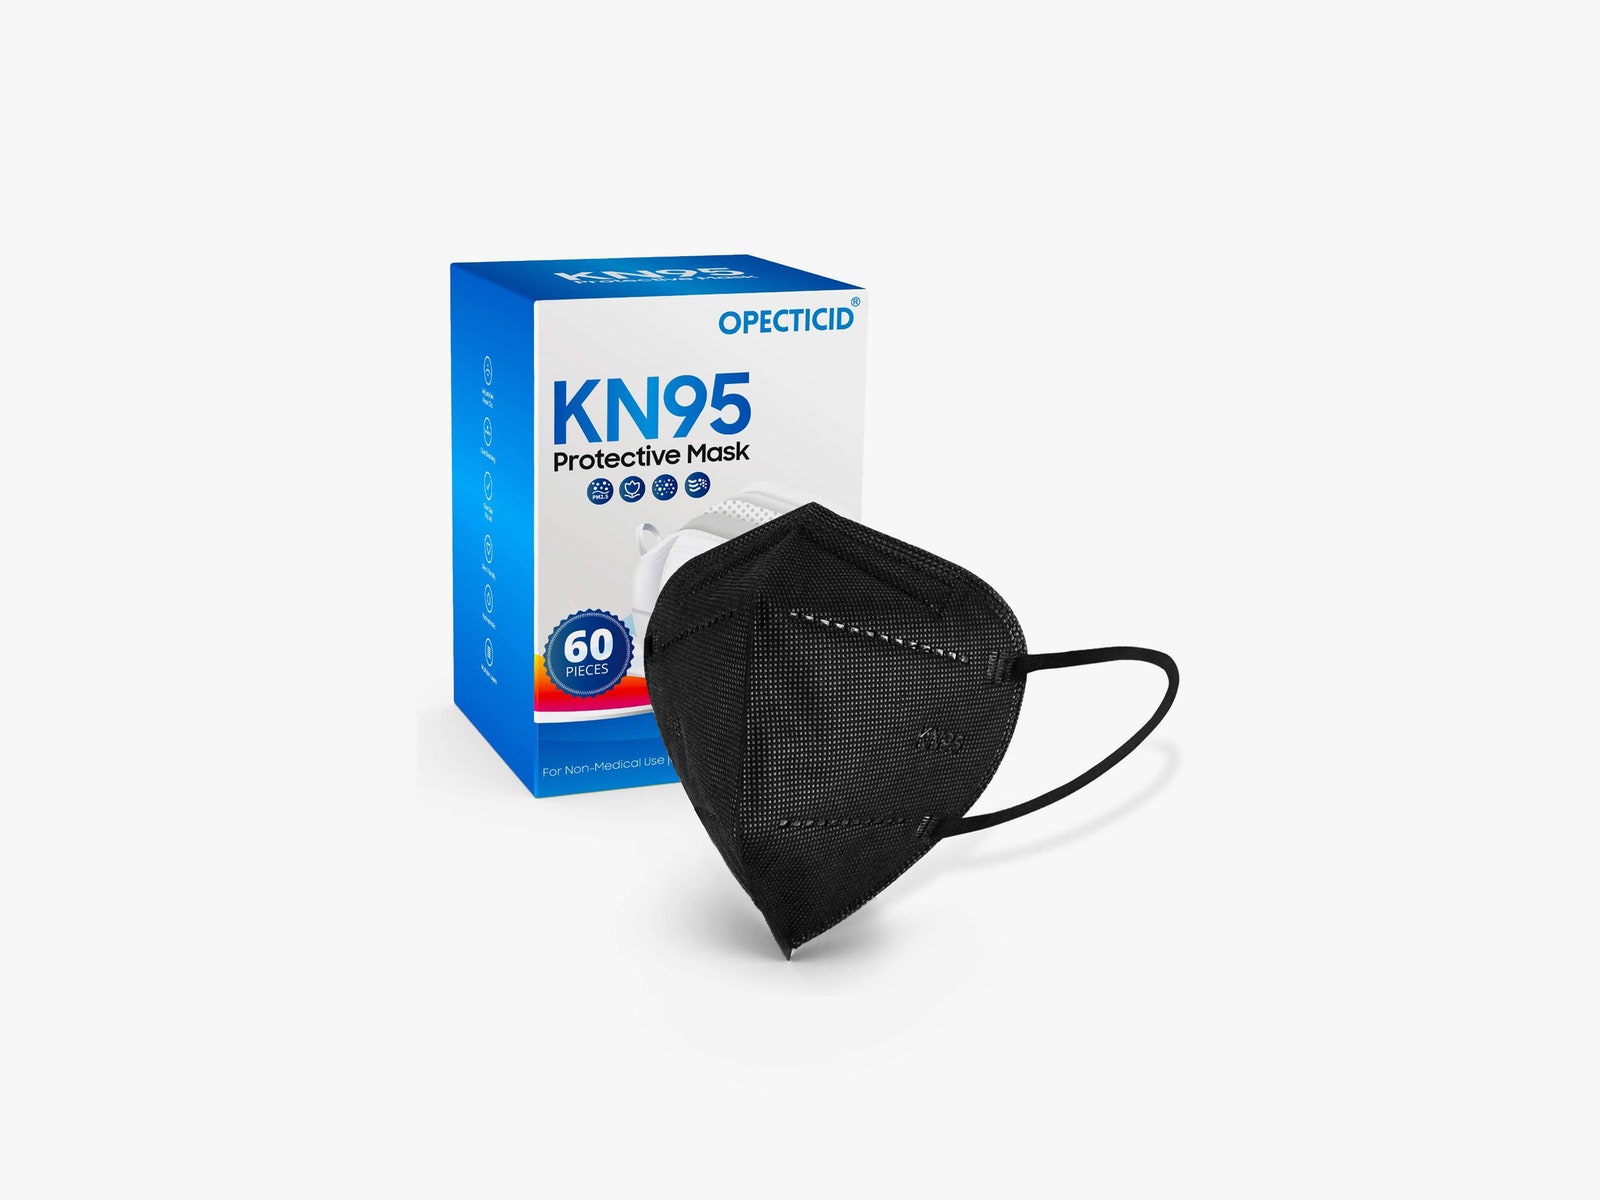 Opectid KN95 Protective Masks.